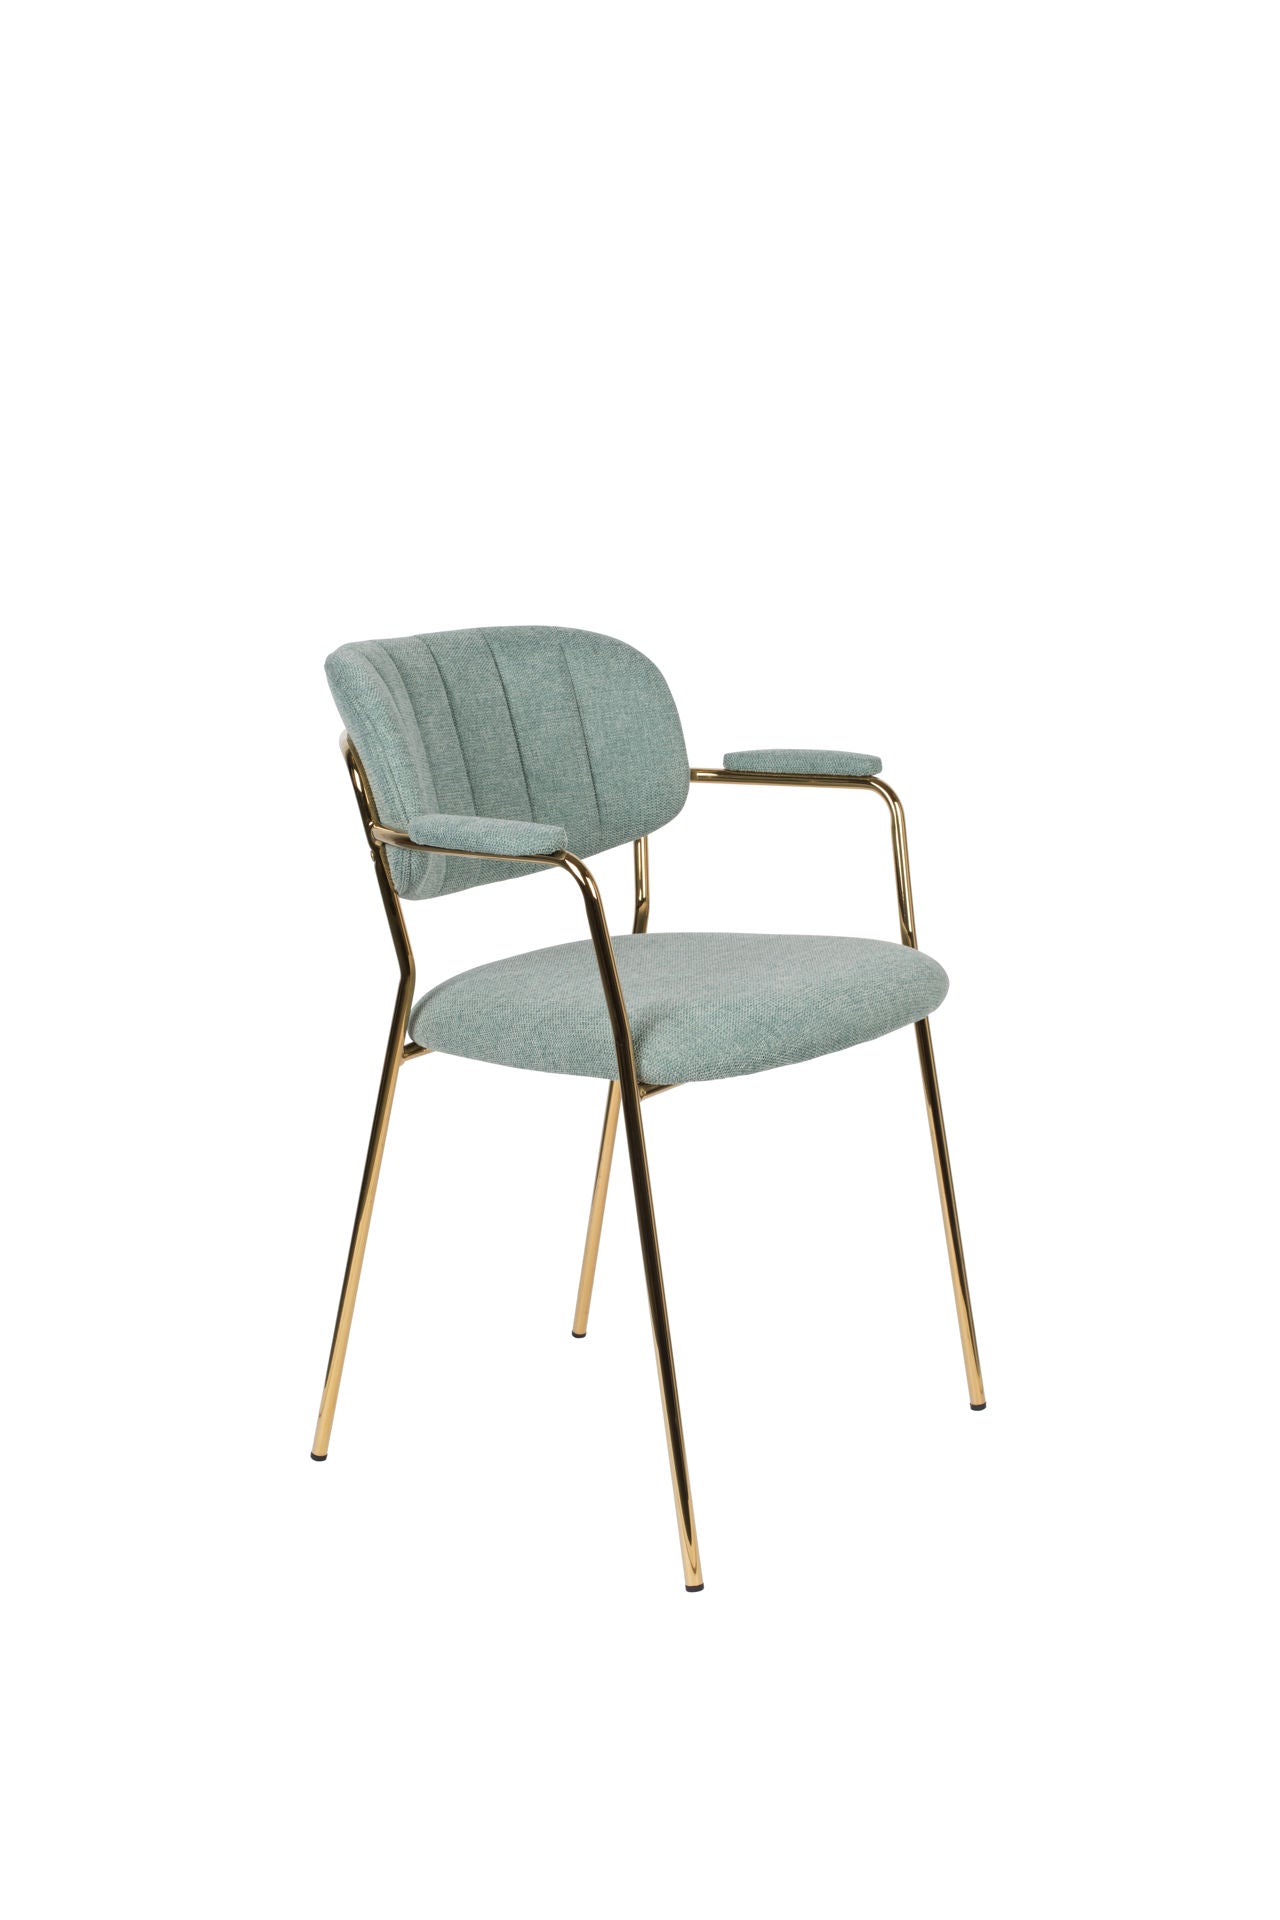 Nancy's Edgemere Chair - Retro - Gold, Light Green - Polyester, Plywood, Steel - 56 cm x 60.5 cm x 78 cm